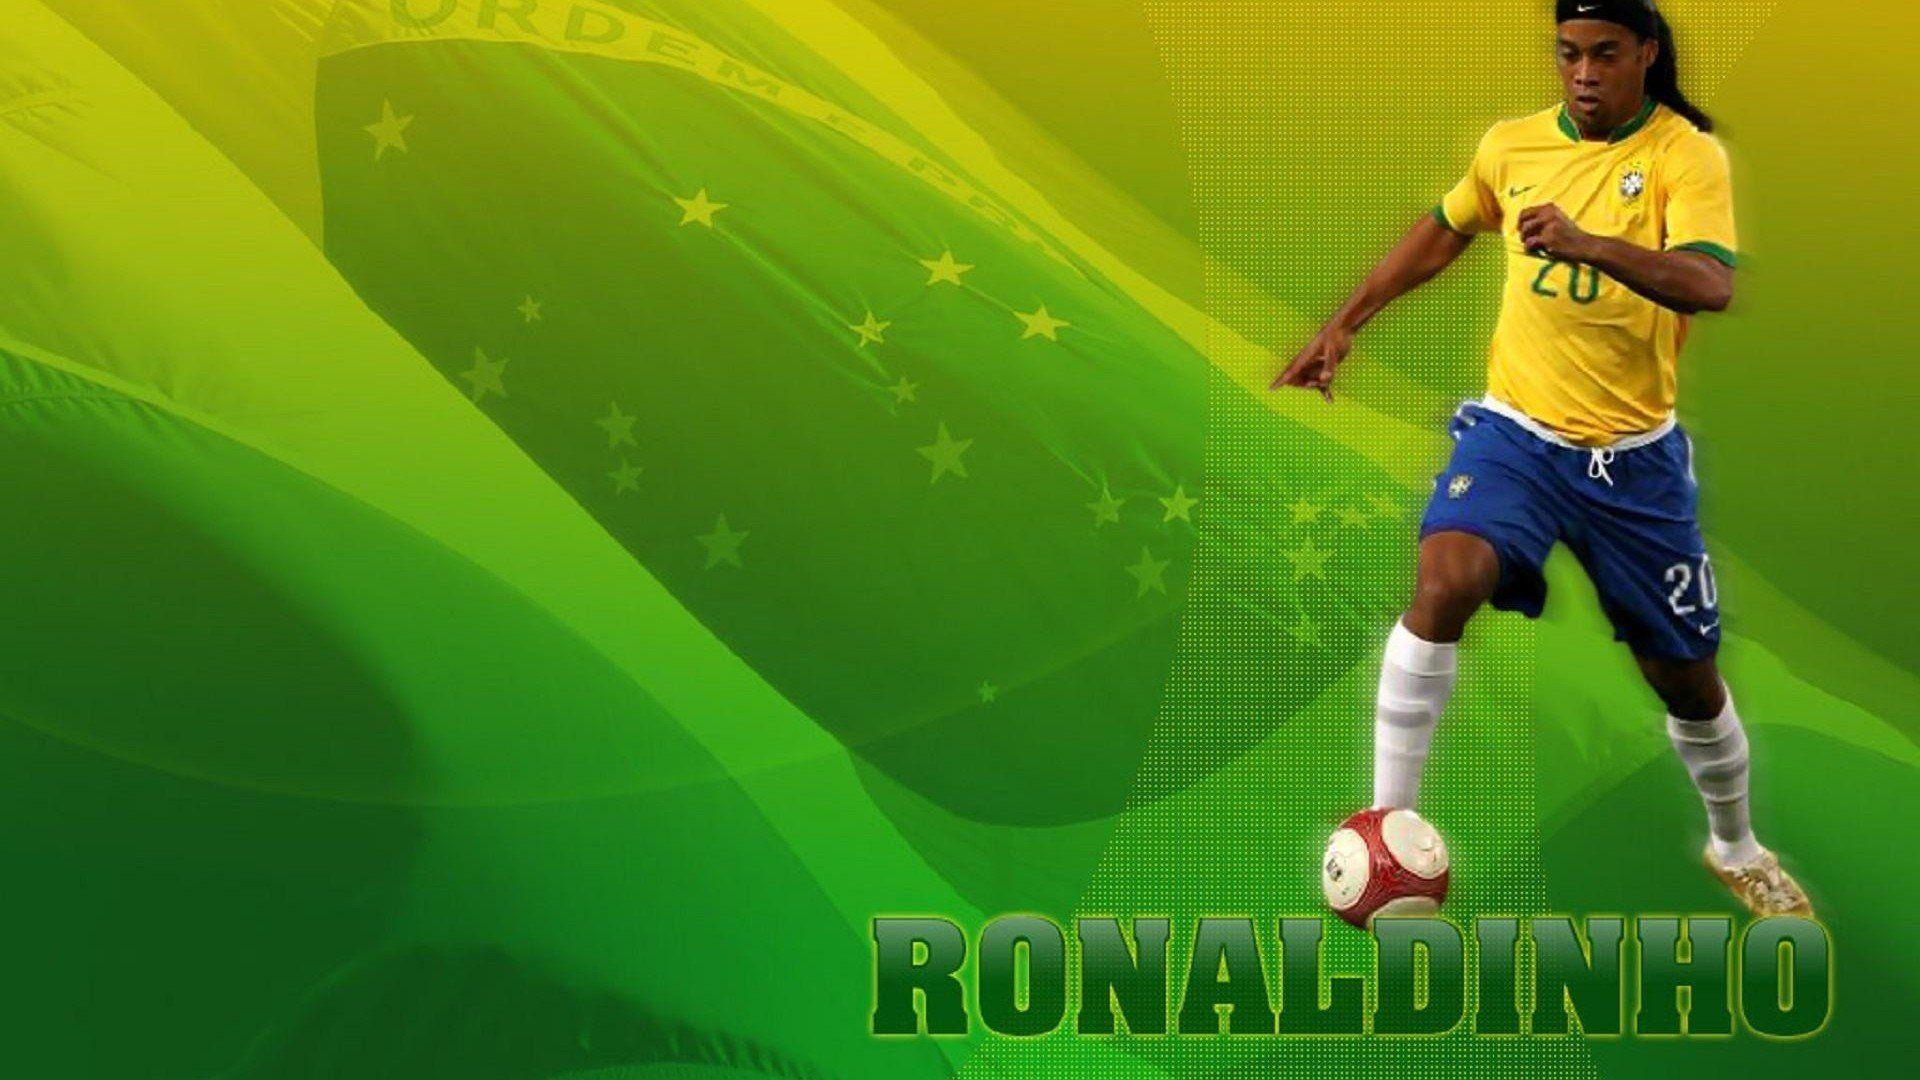 Ronaldinho Gaucho Wallpaper